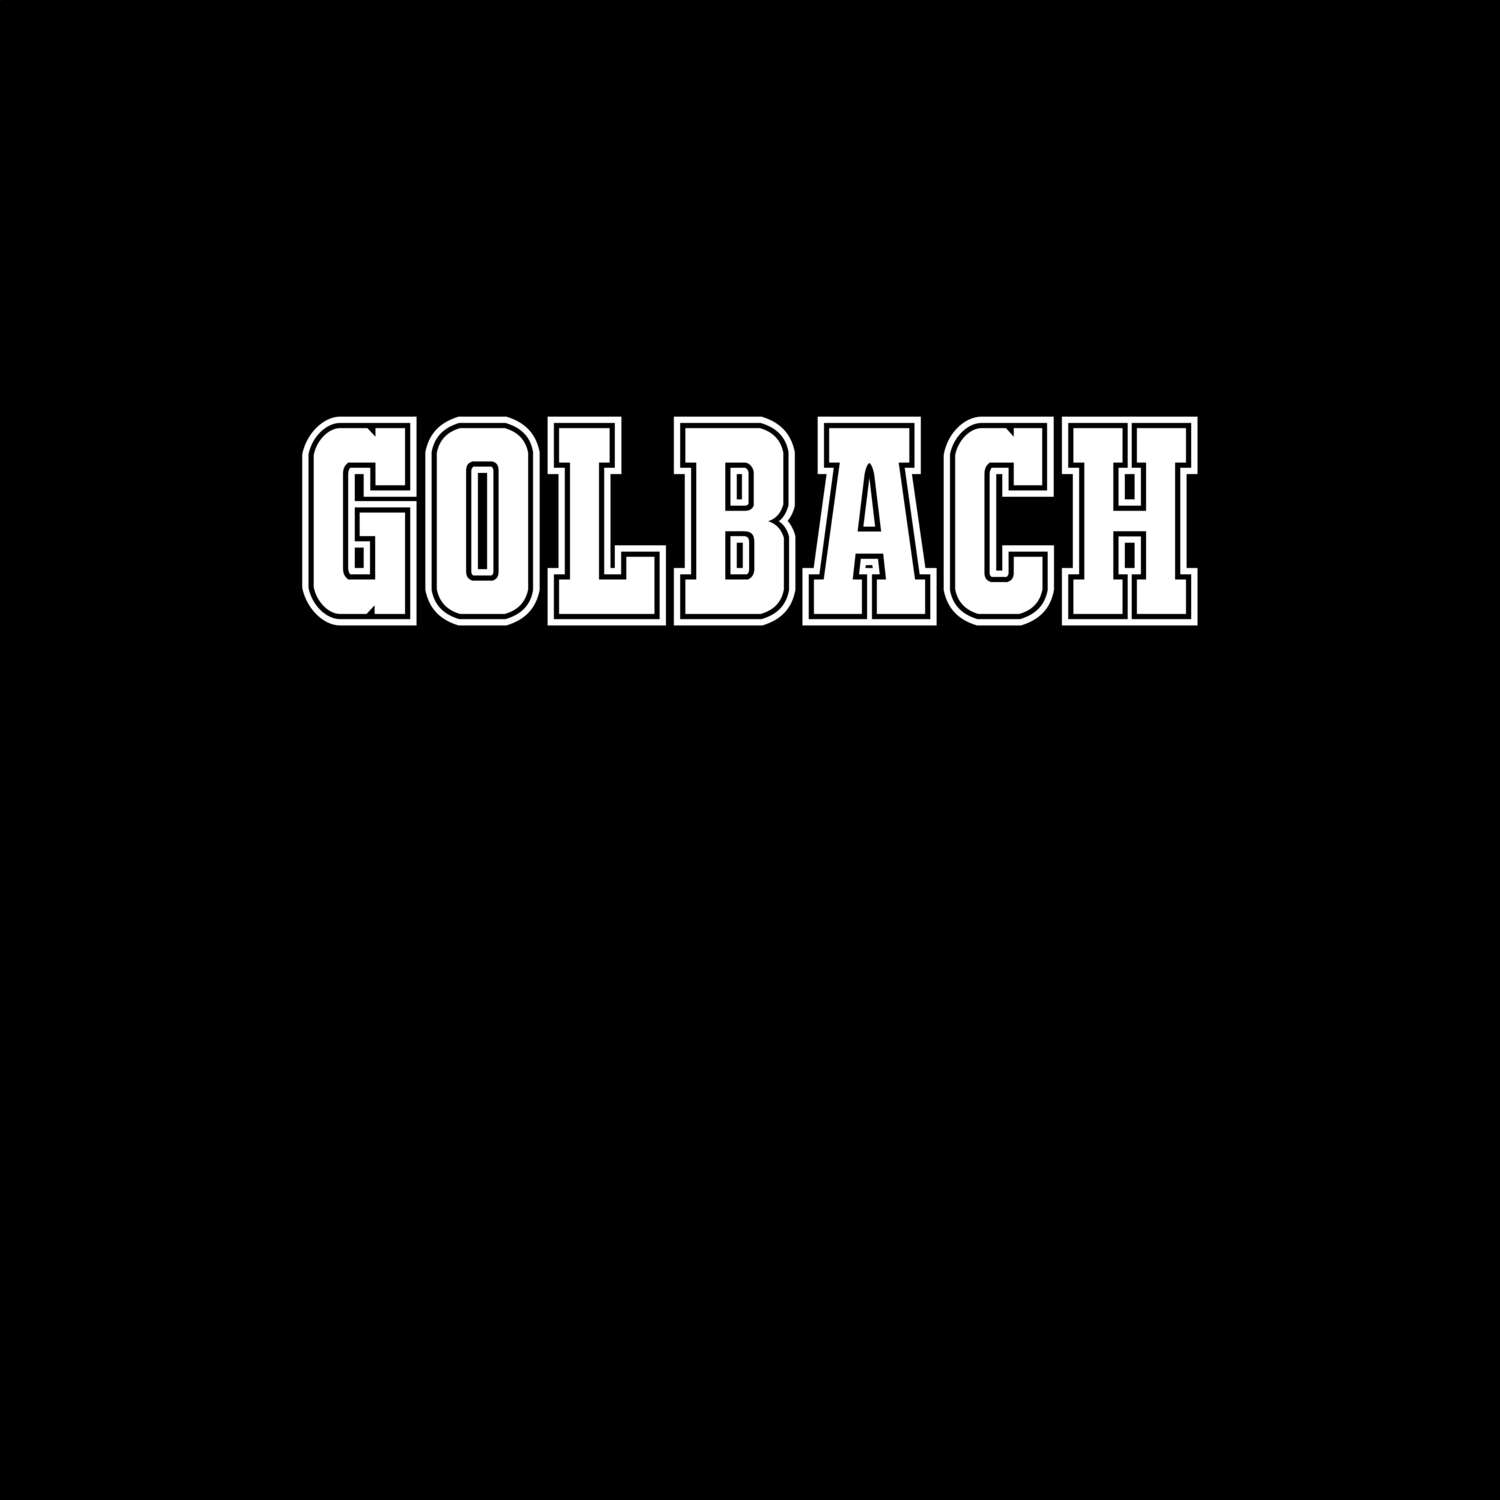 Golbach T-Shirt »Classic«